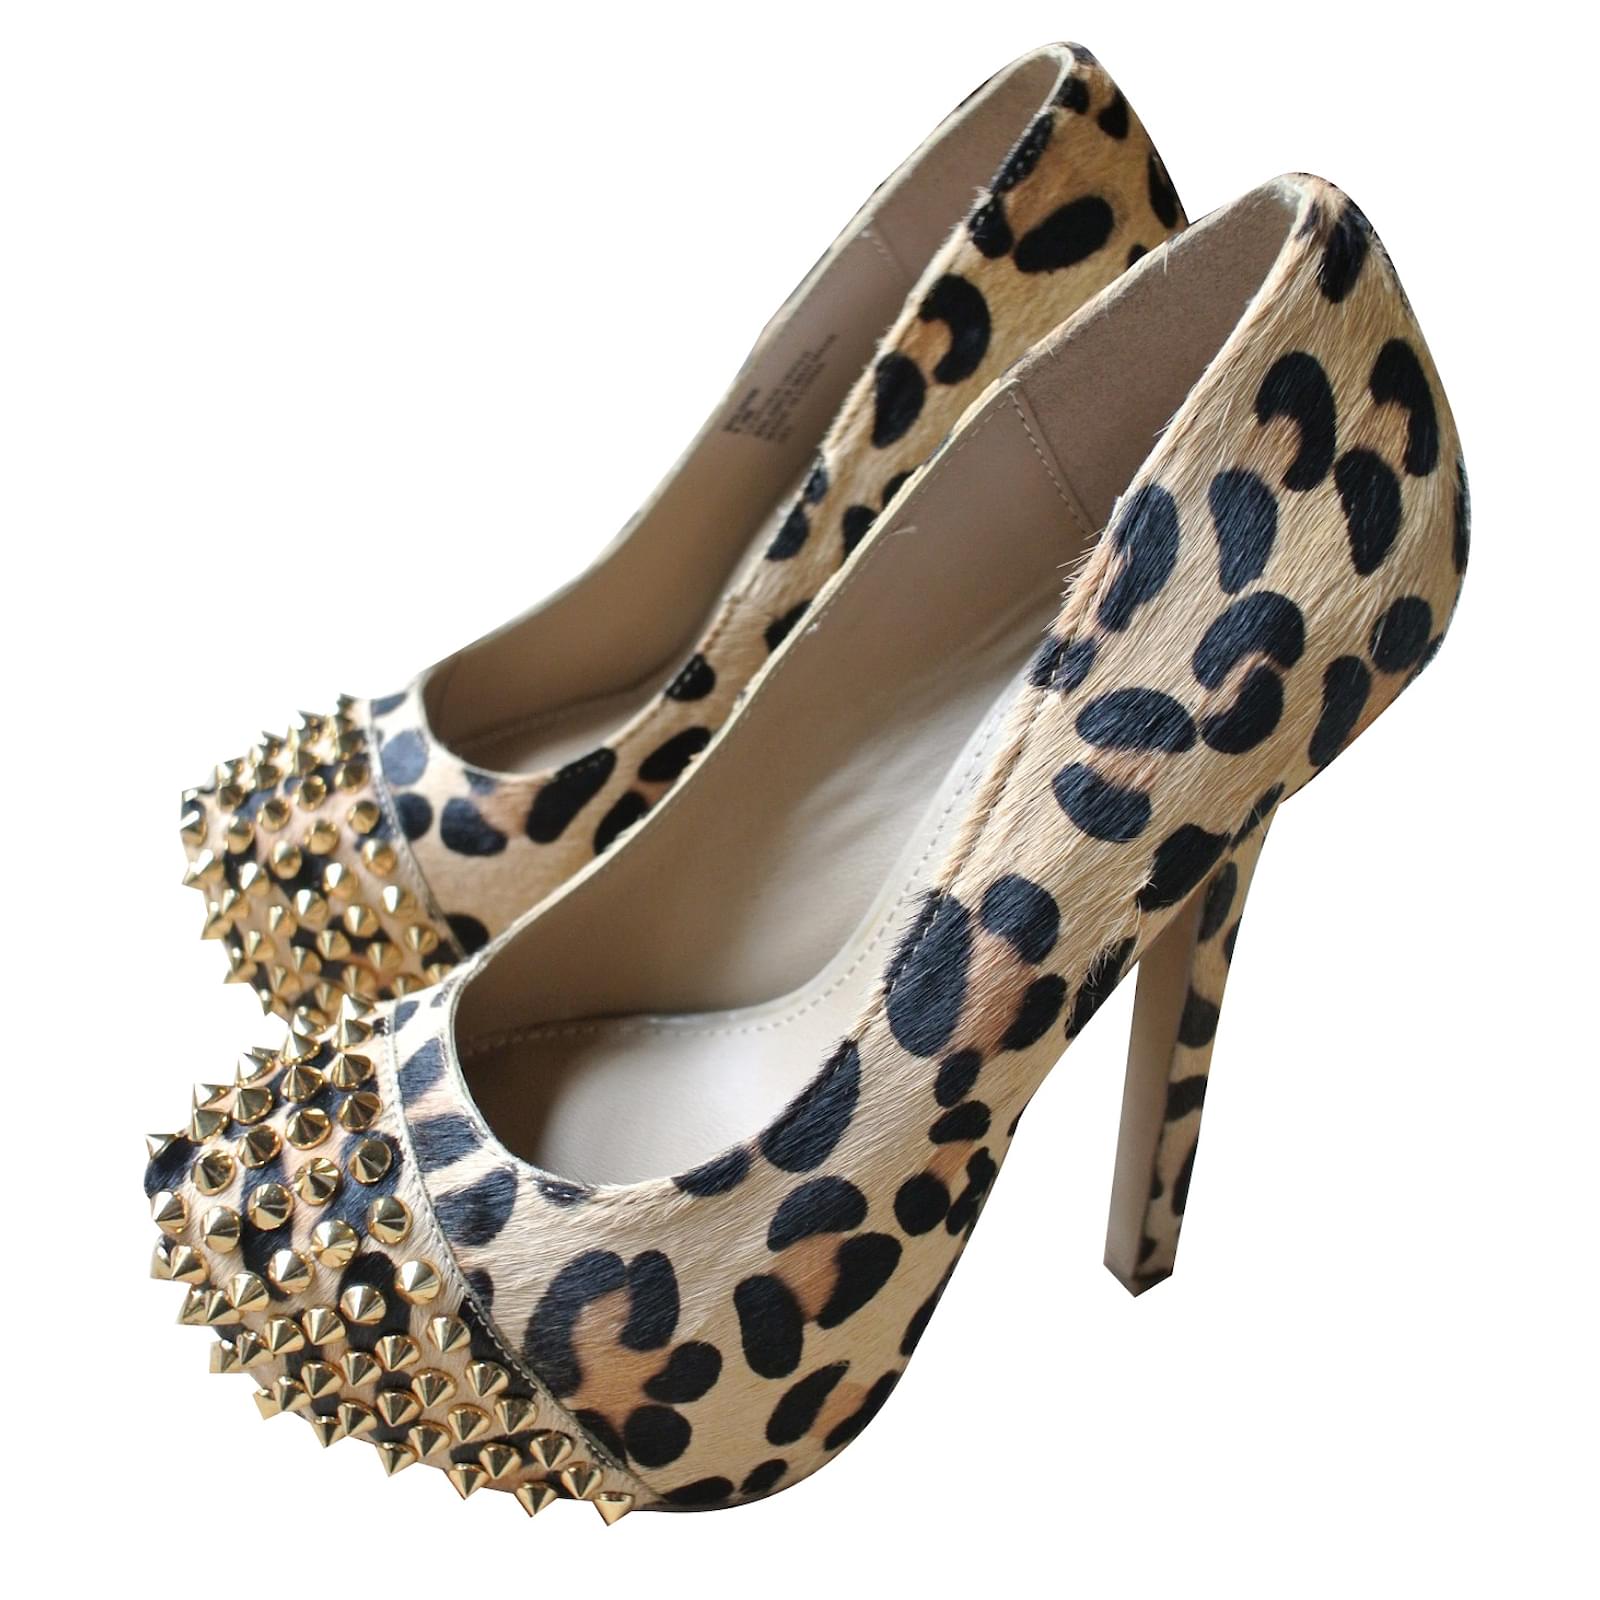 steve madden heels leopard print